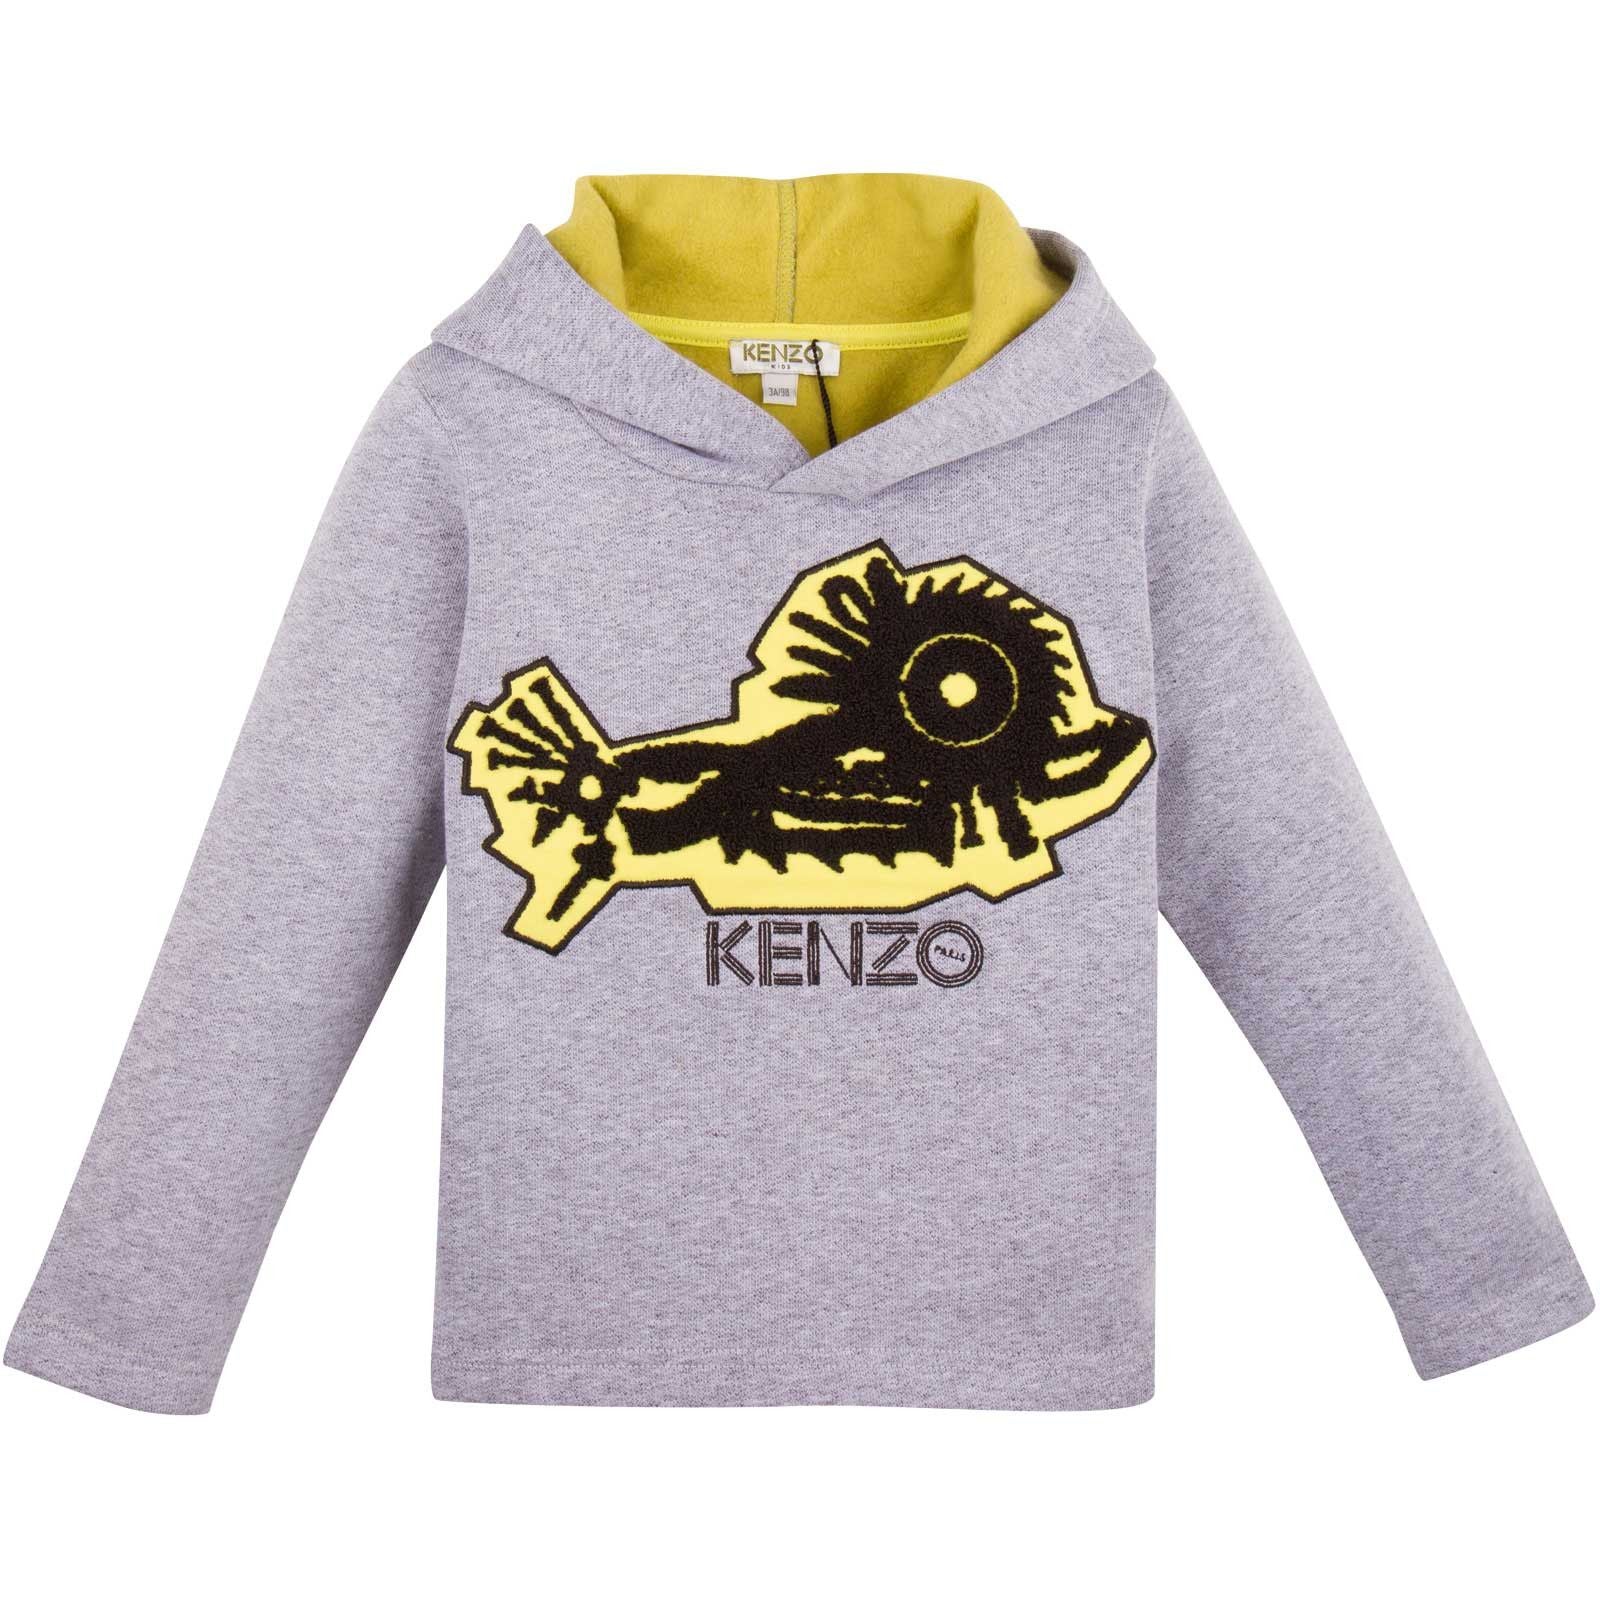 Boys Grey Monster Embroidered Hooded Sweatshirt - CÉMAROSE | Children's Fashion Store - 1